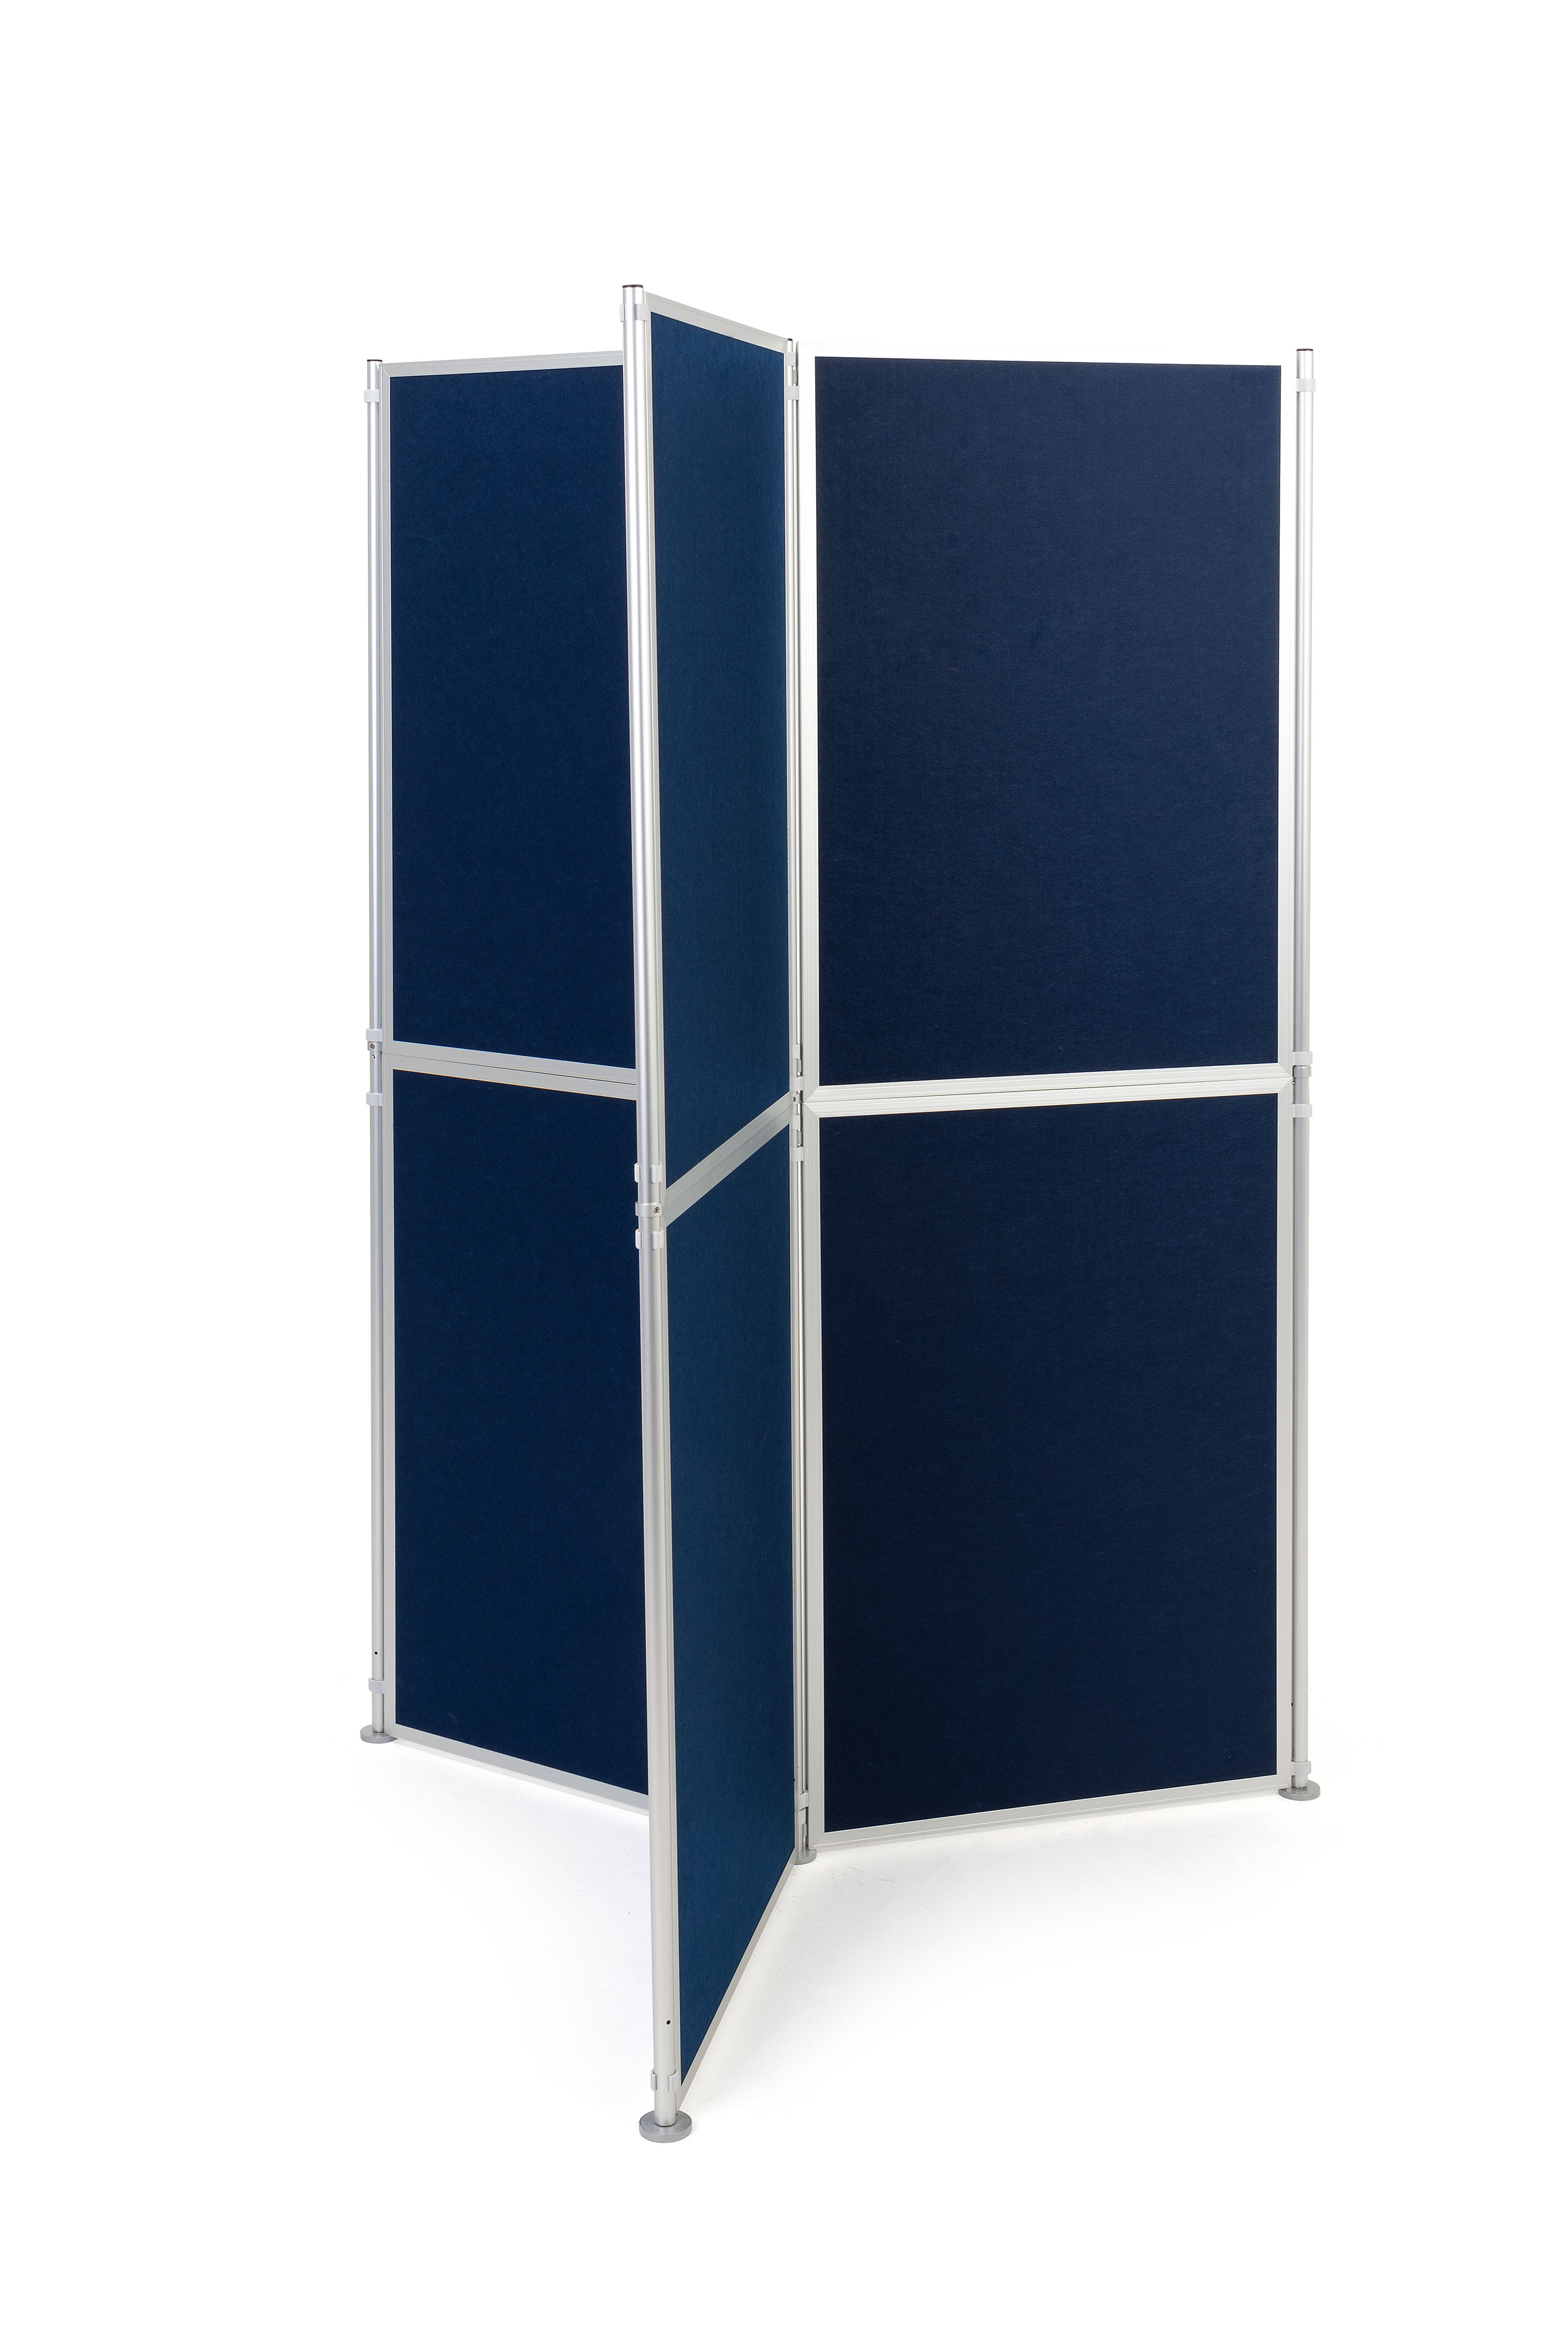 Loop Fabric Floor Exhibit Displays, 3-Panel Set - Free Shipping –  Displays4Sale